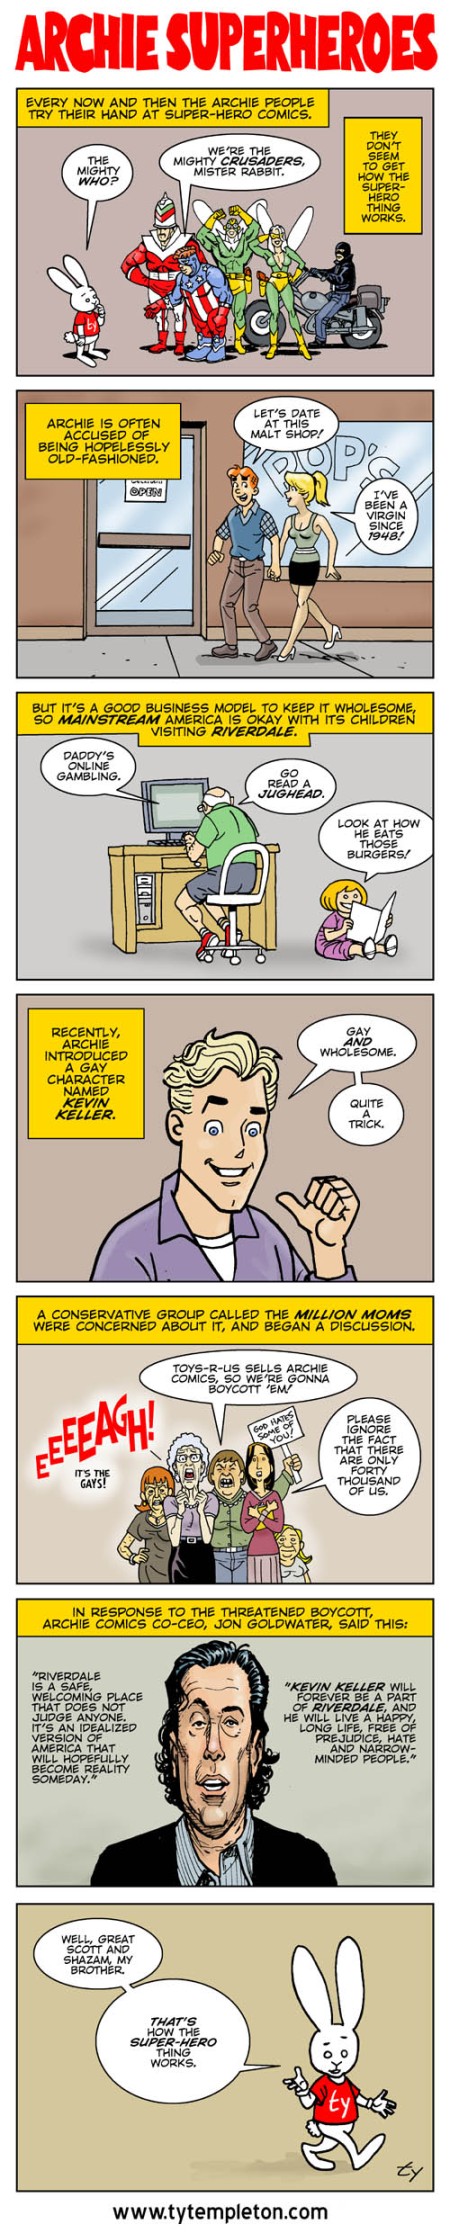 Go Archie Comics!